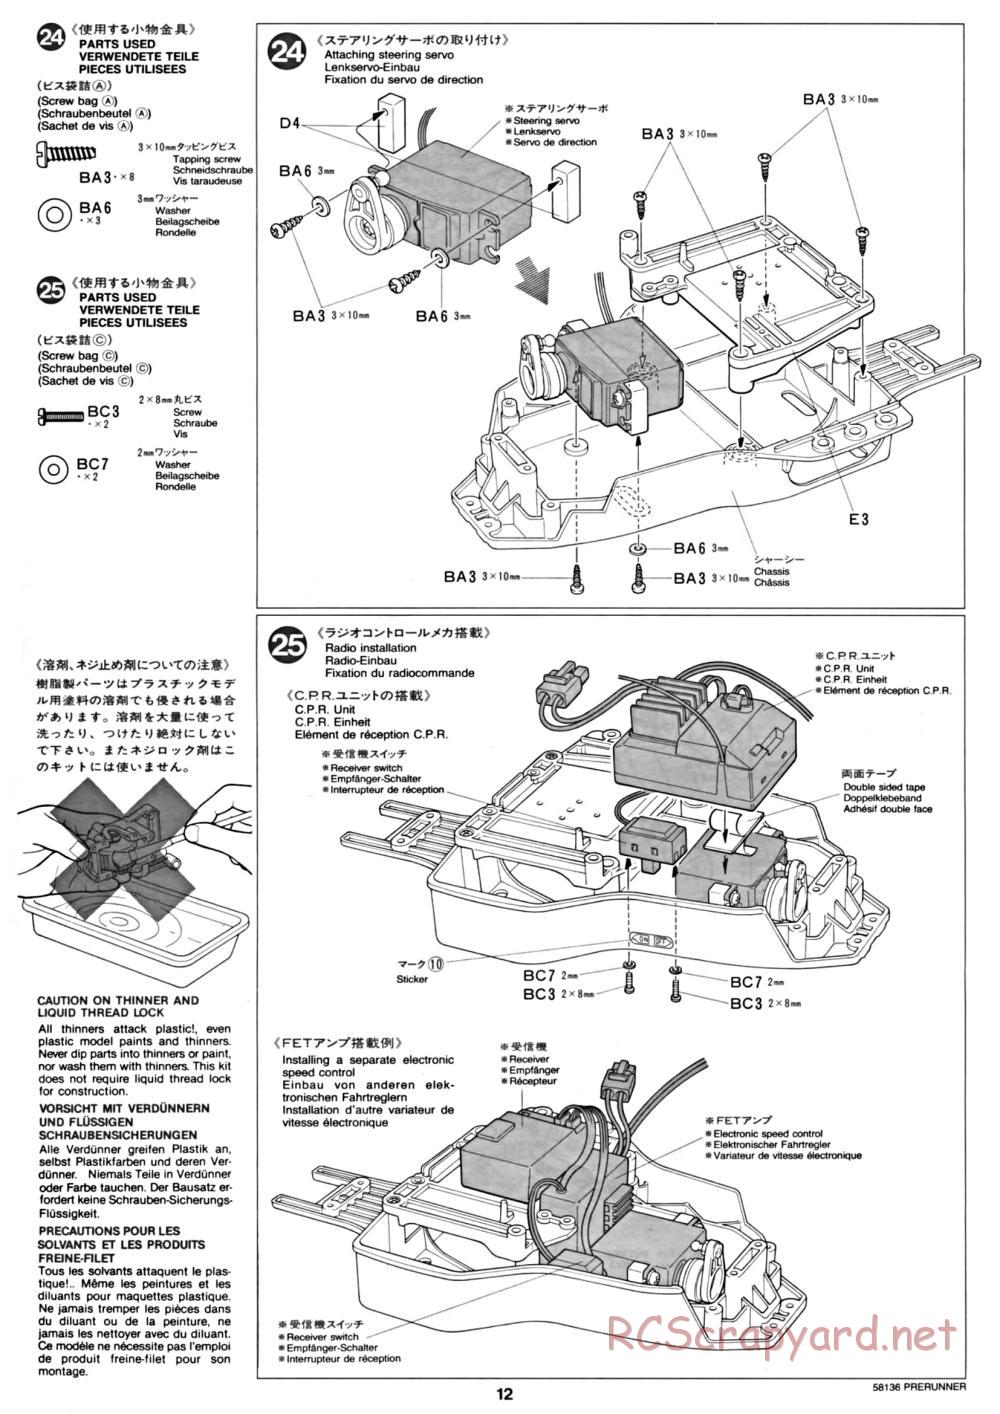 Tamiya - Toyota Prerunner Chassis - Manual - Page 12